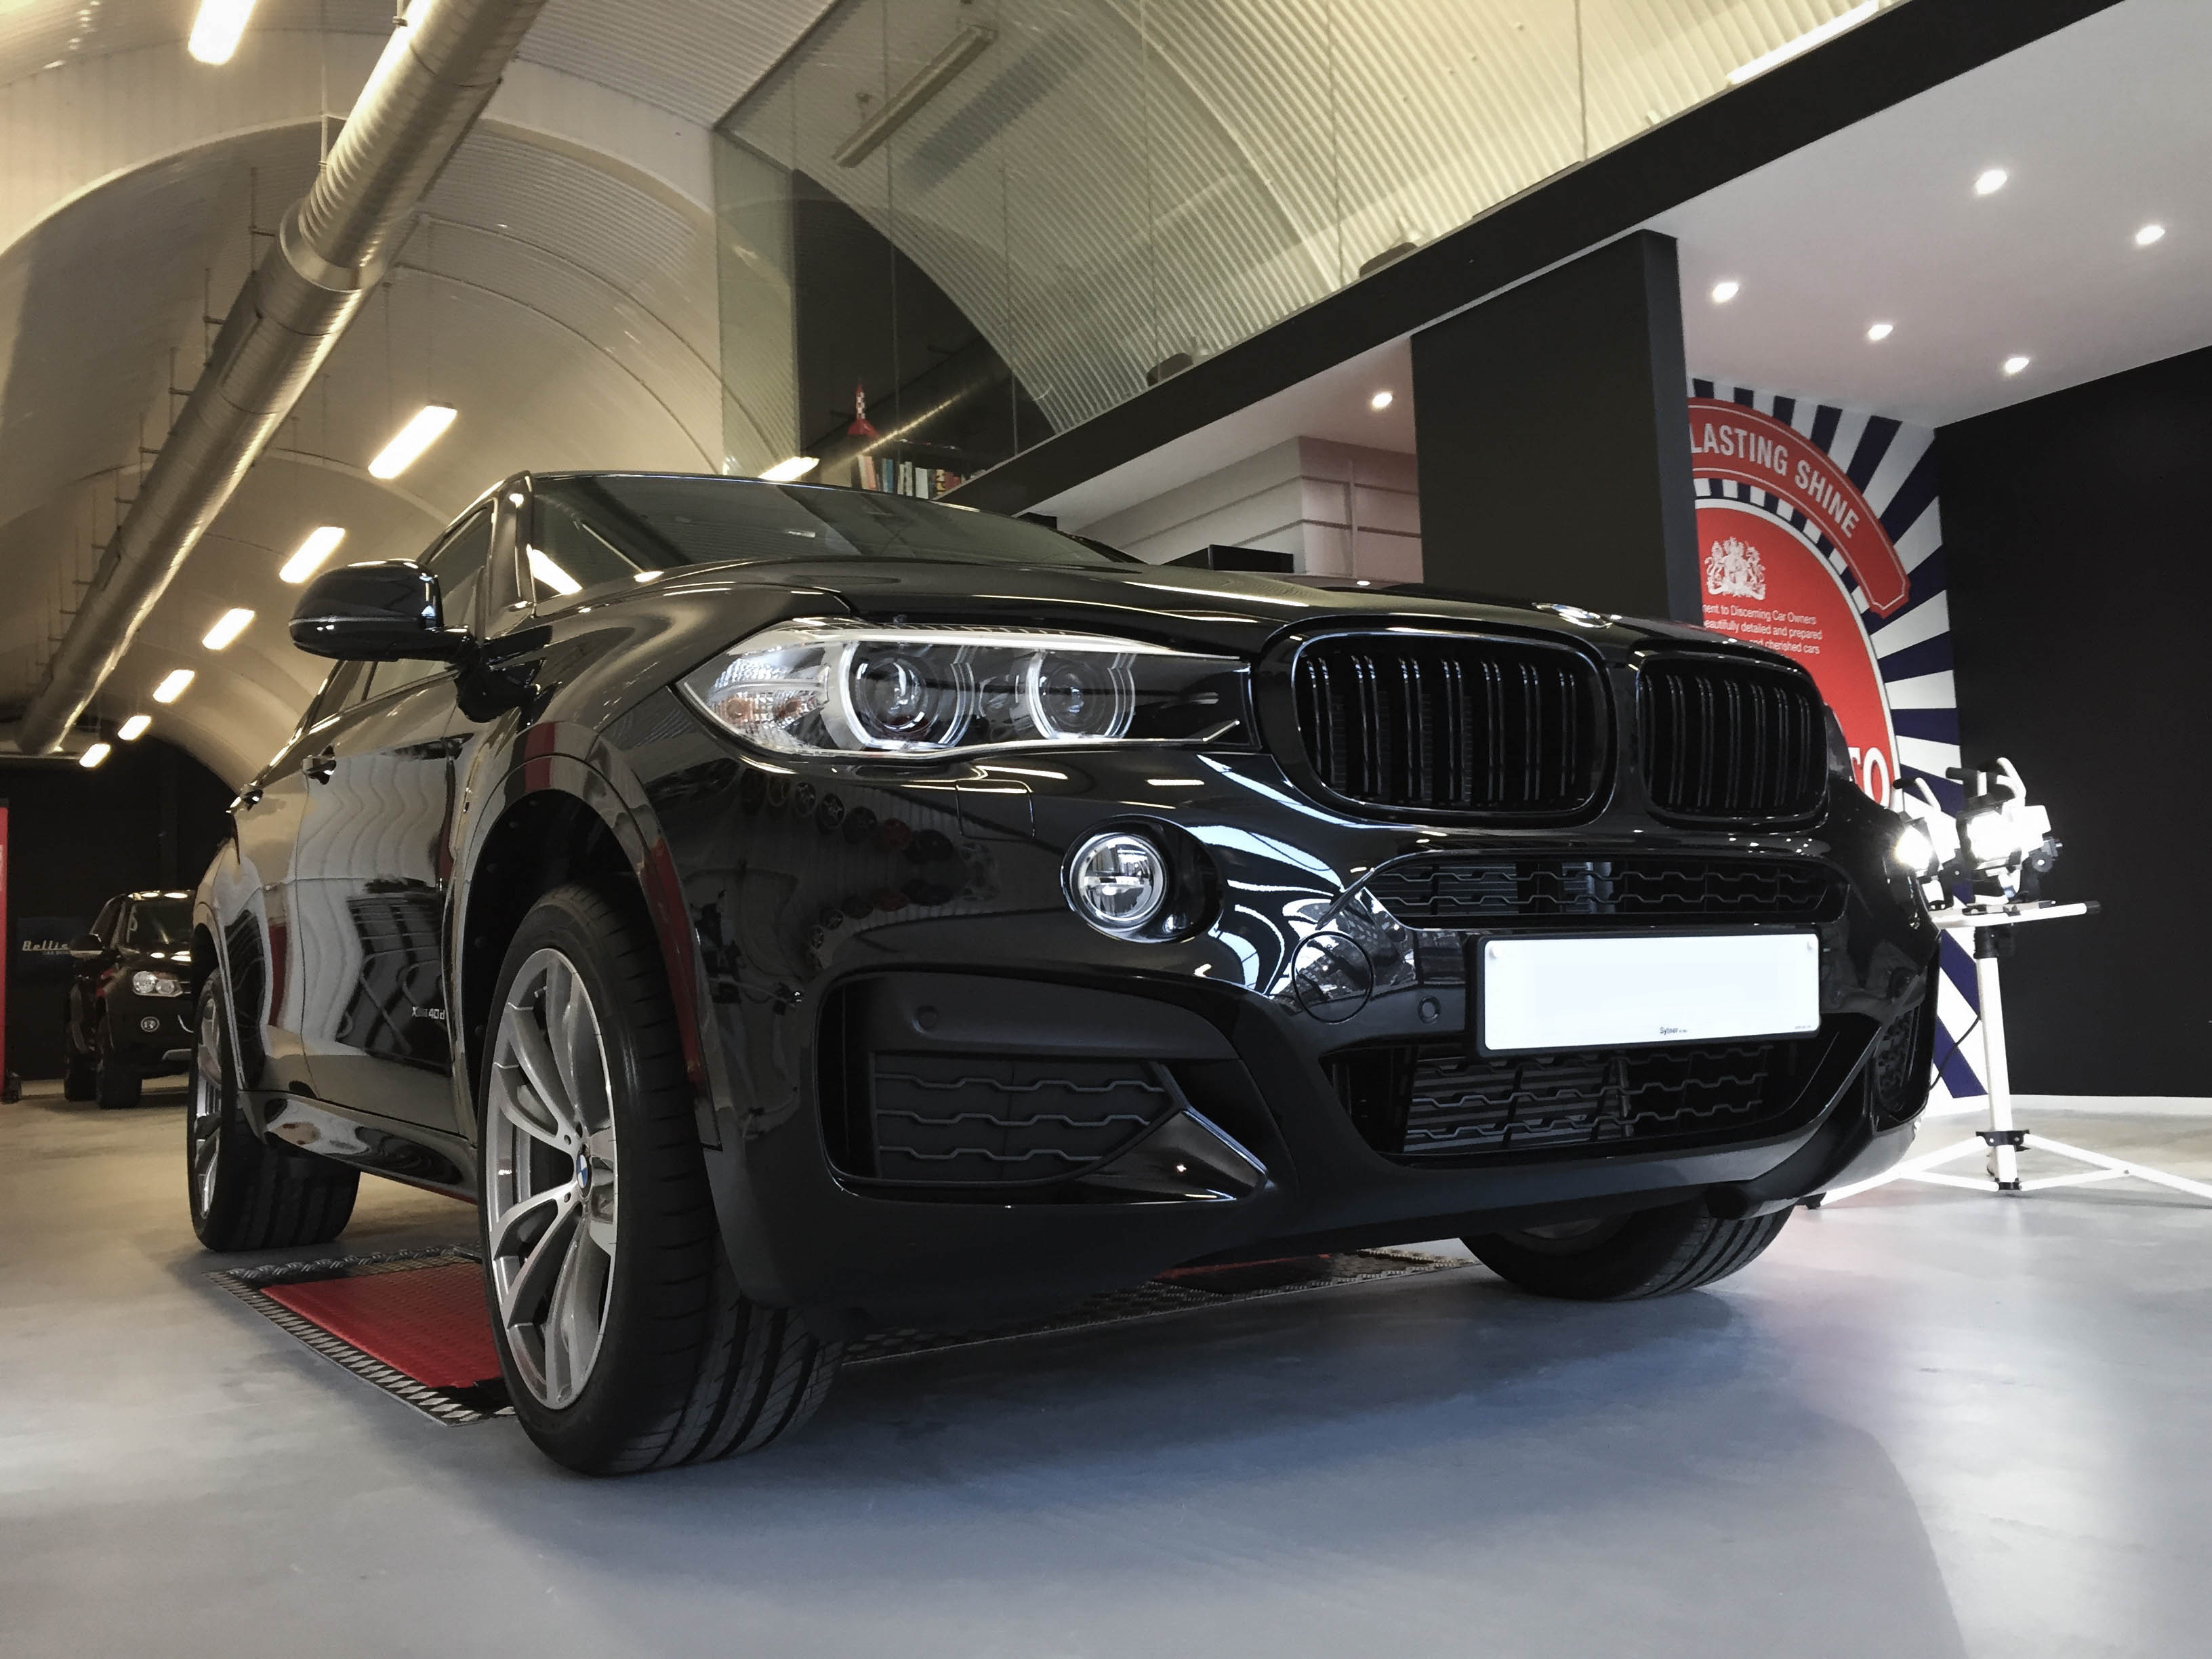 BMW X6 – Front